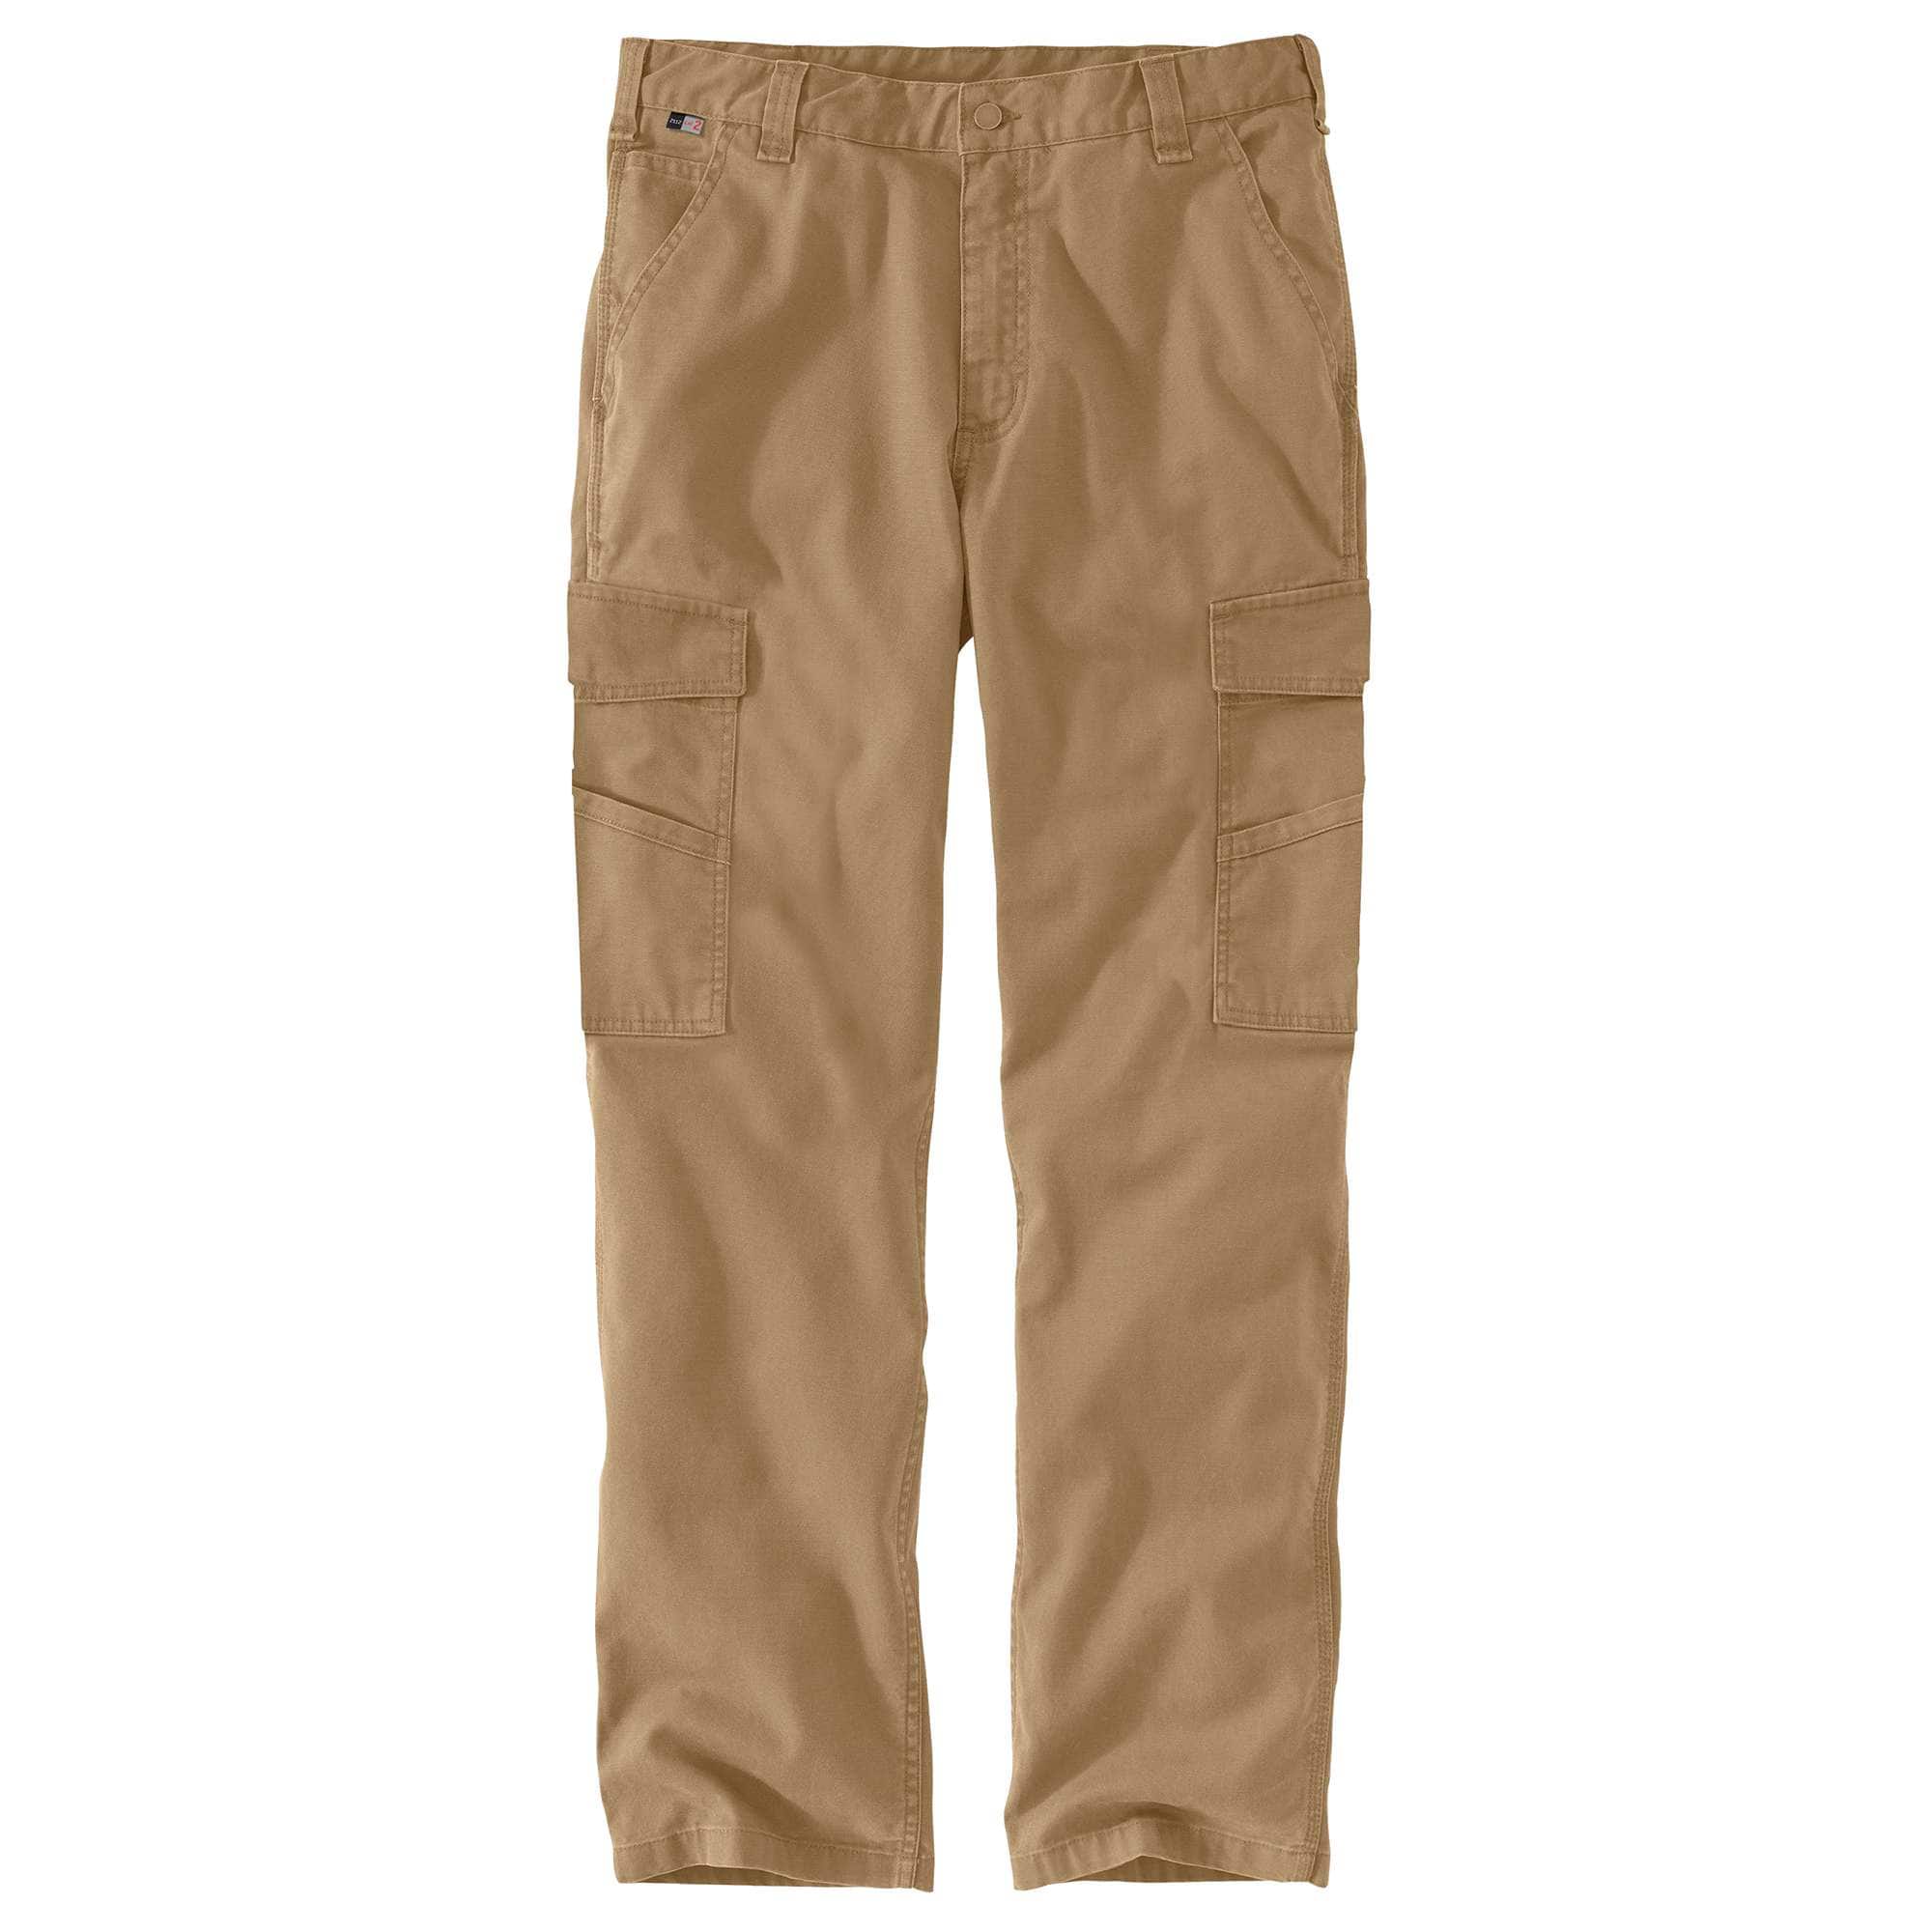 YFPWM Carhartt Pants for Men Summer Pants Pirate Pants Softball Pants Plaid  Pants Lounge Pants Flare Yoga Pants Motorcycle Pants Pocket Zipper